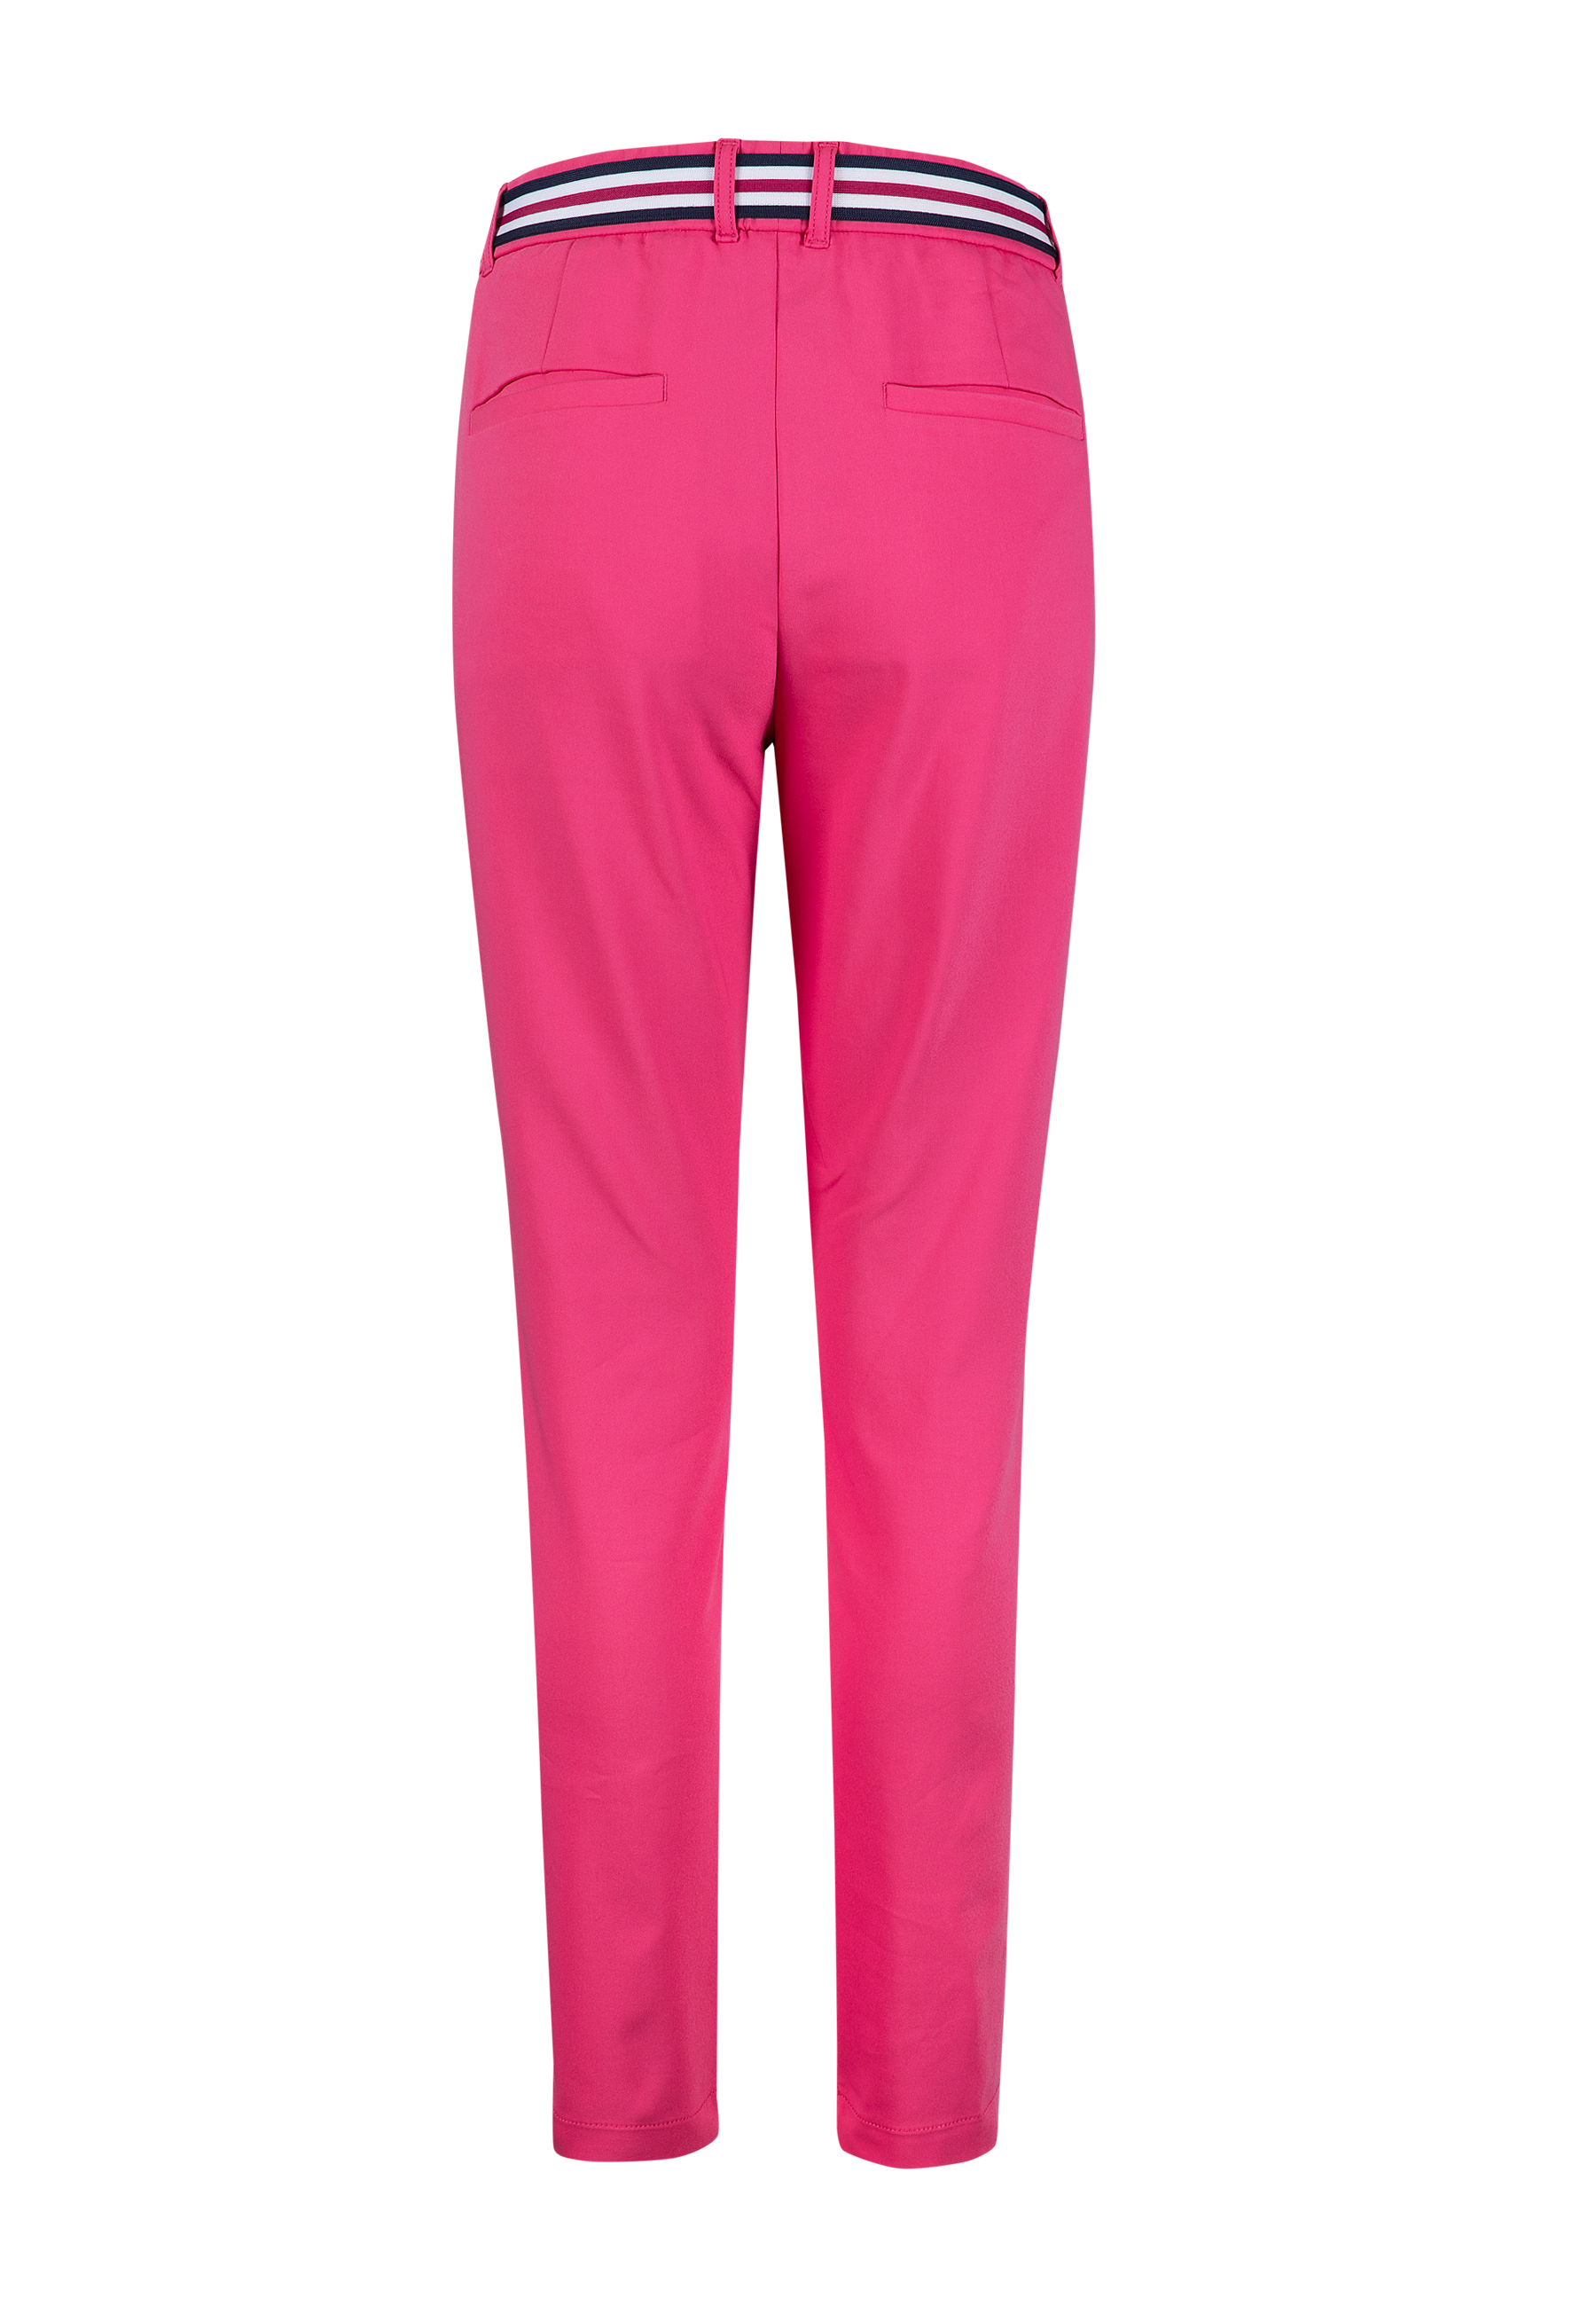 girls golf long pants 'EASY ELEGANCE' (pink)